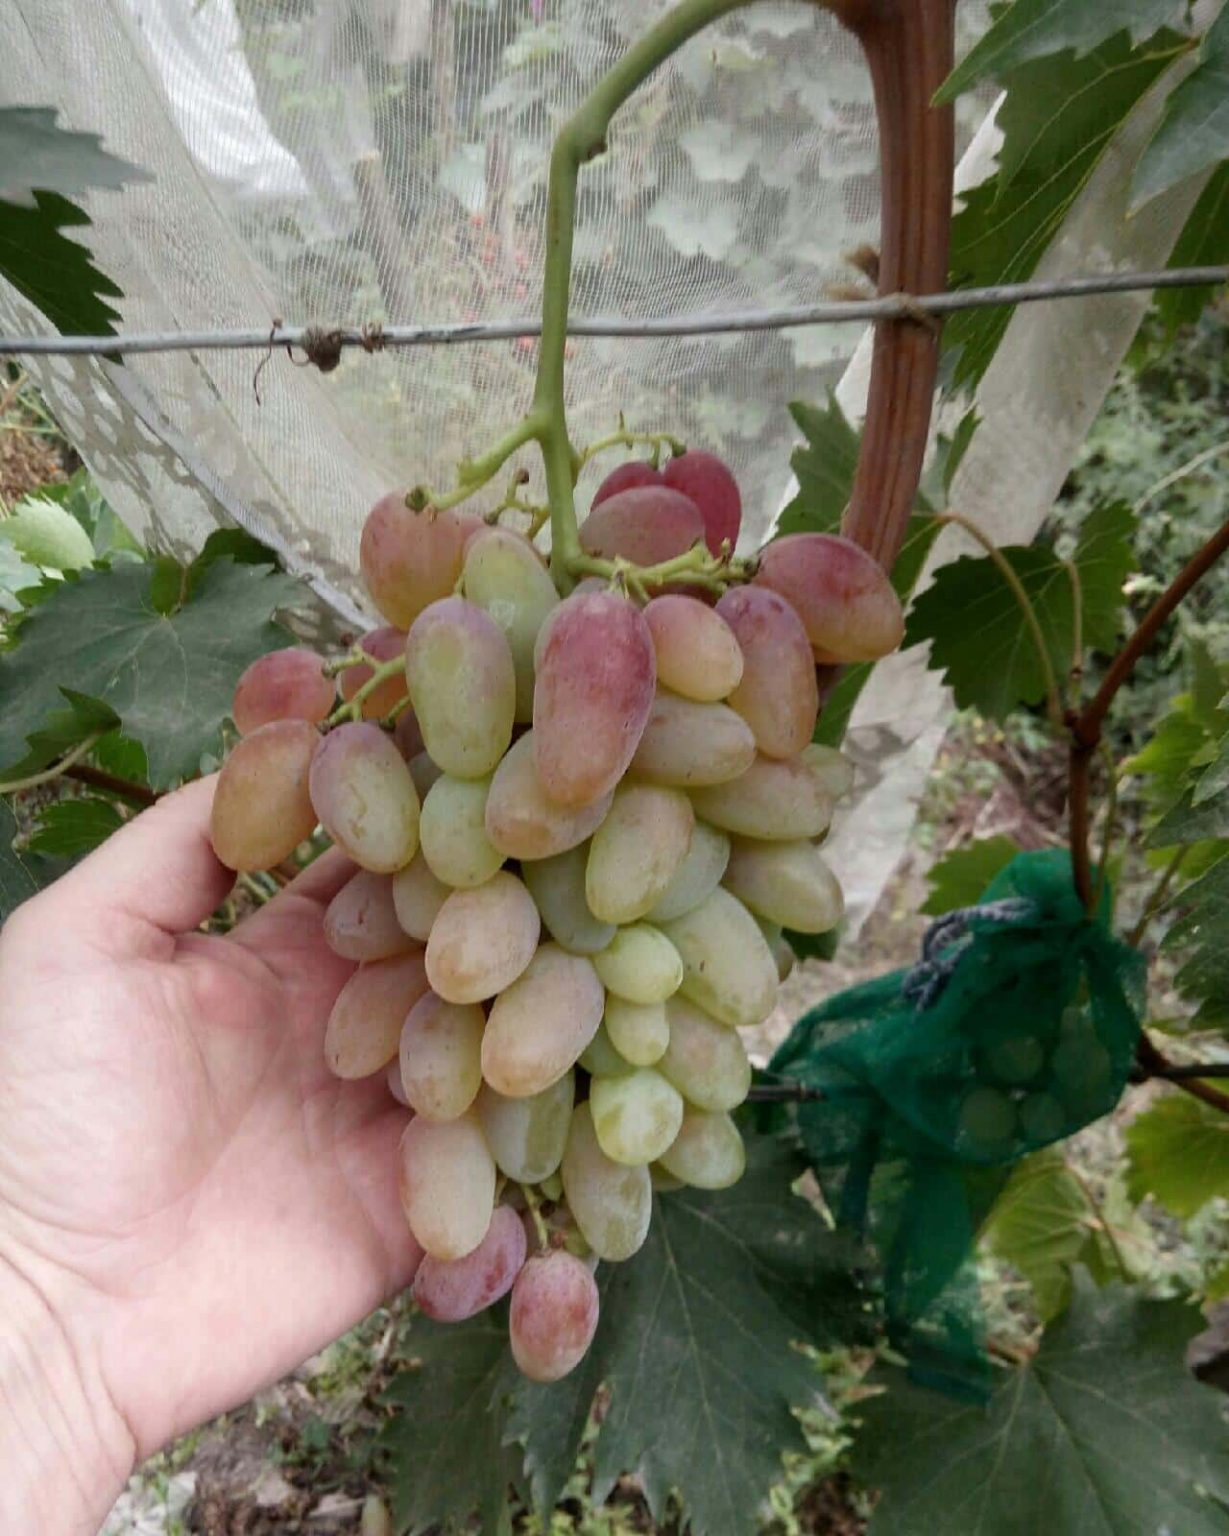 Матраса сорт винограда описание